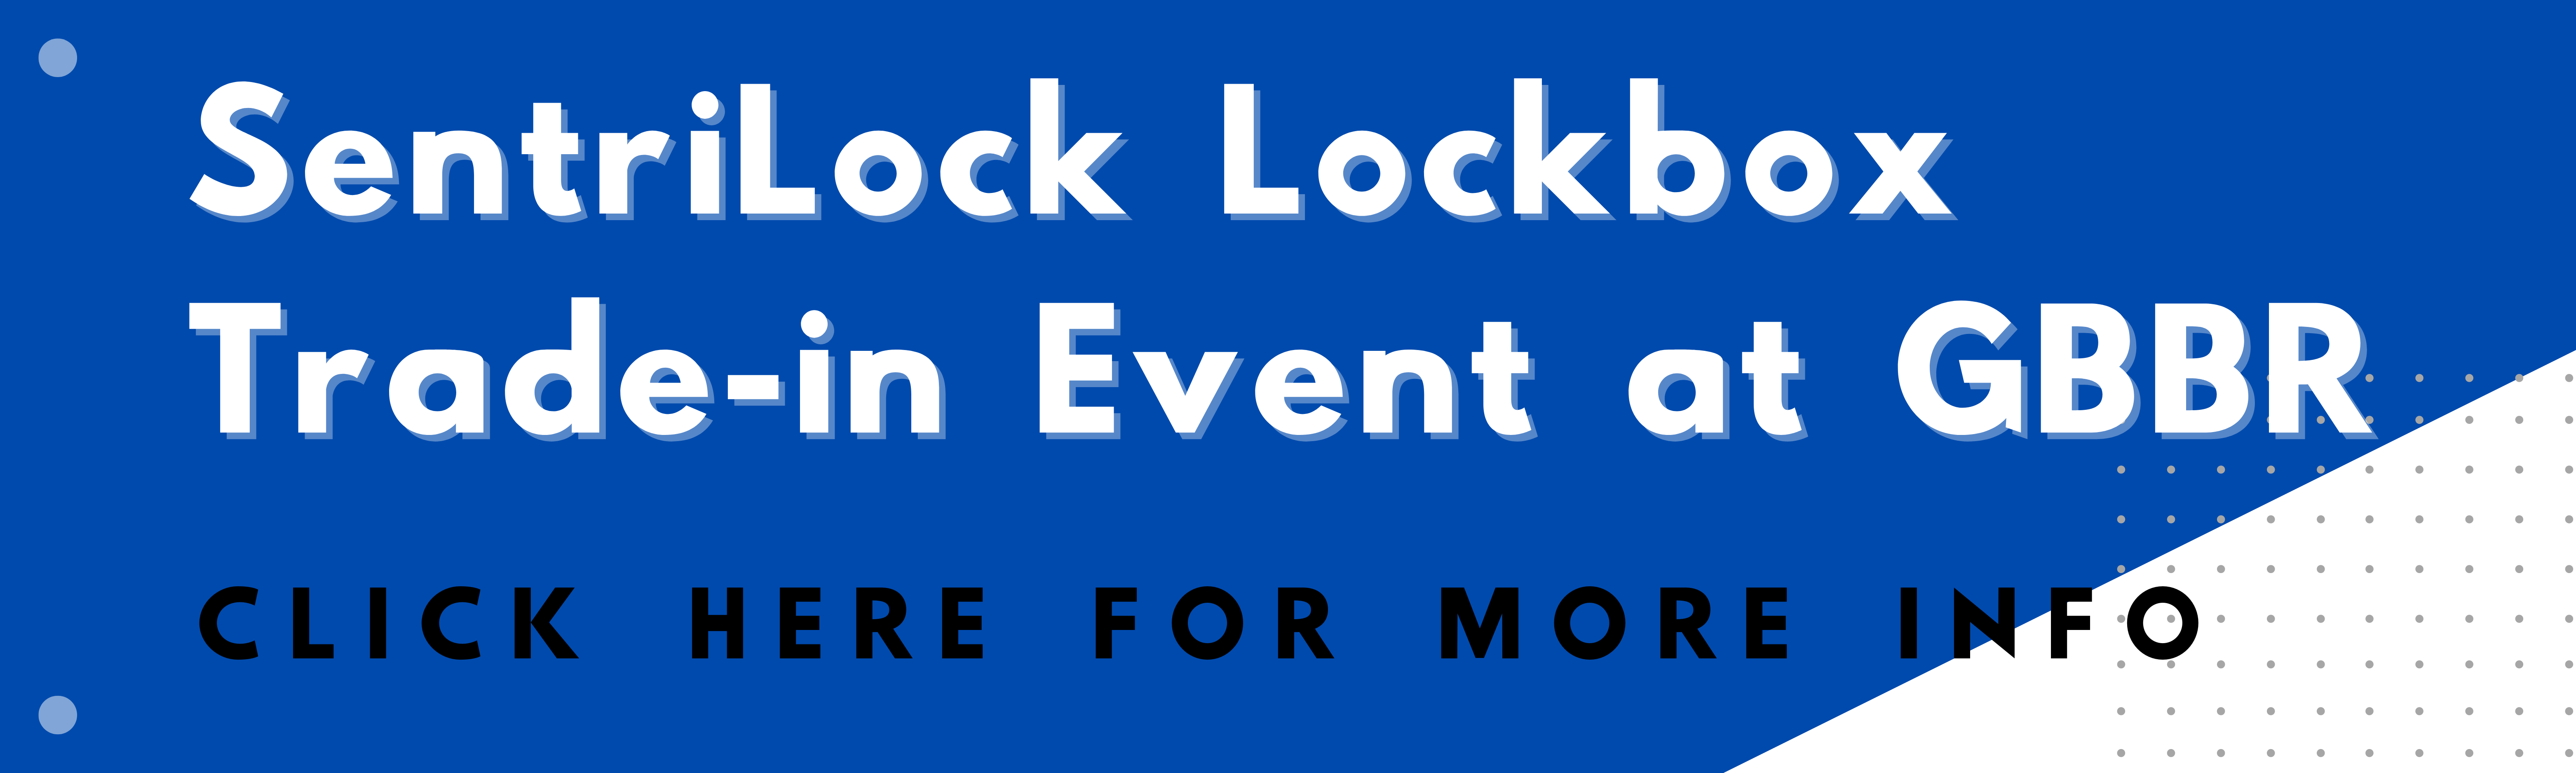 Lockbox trade-in event at GBBR